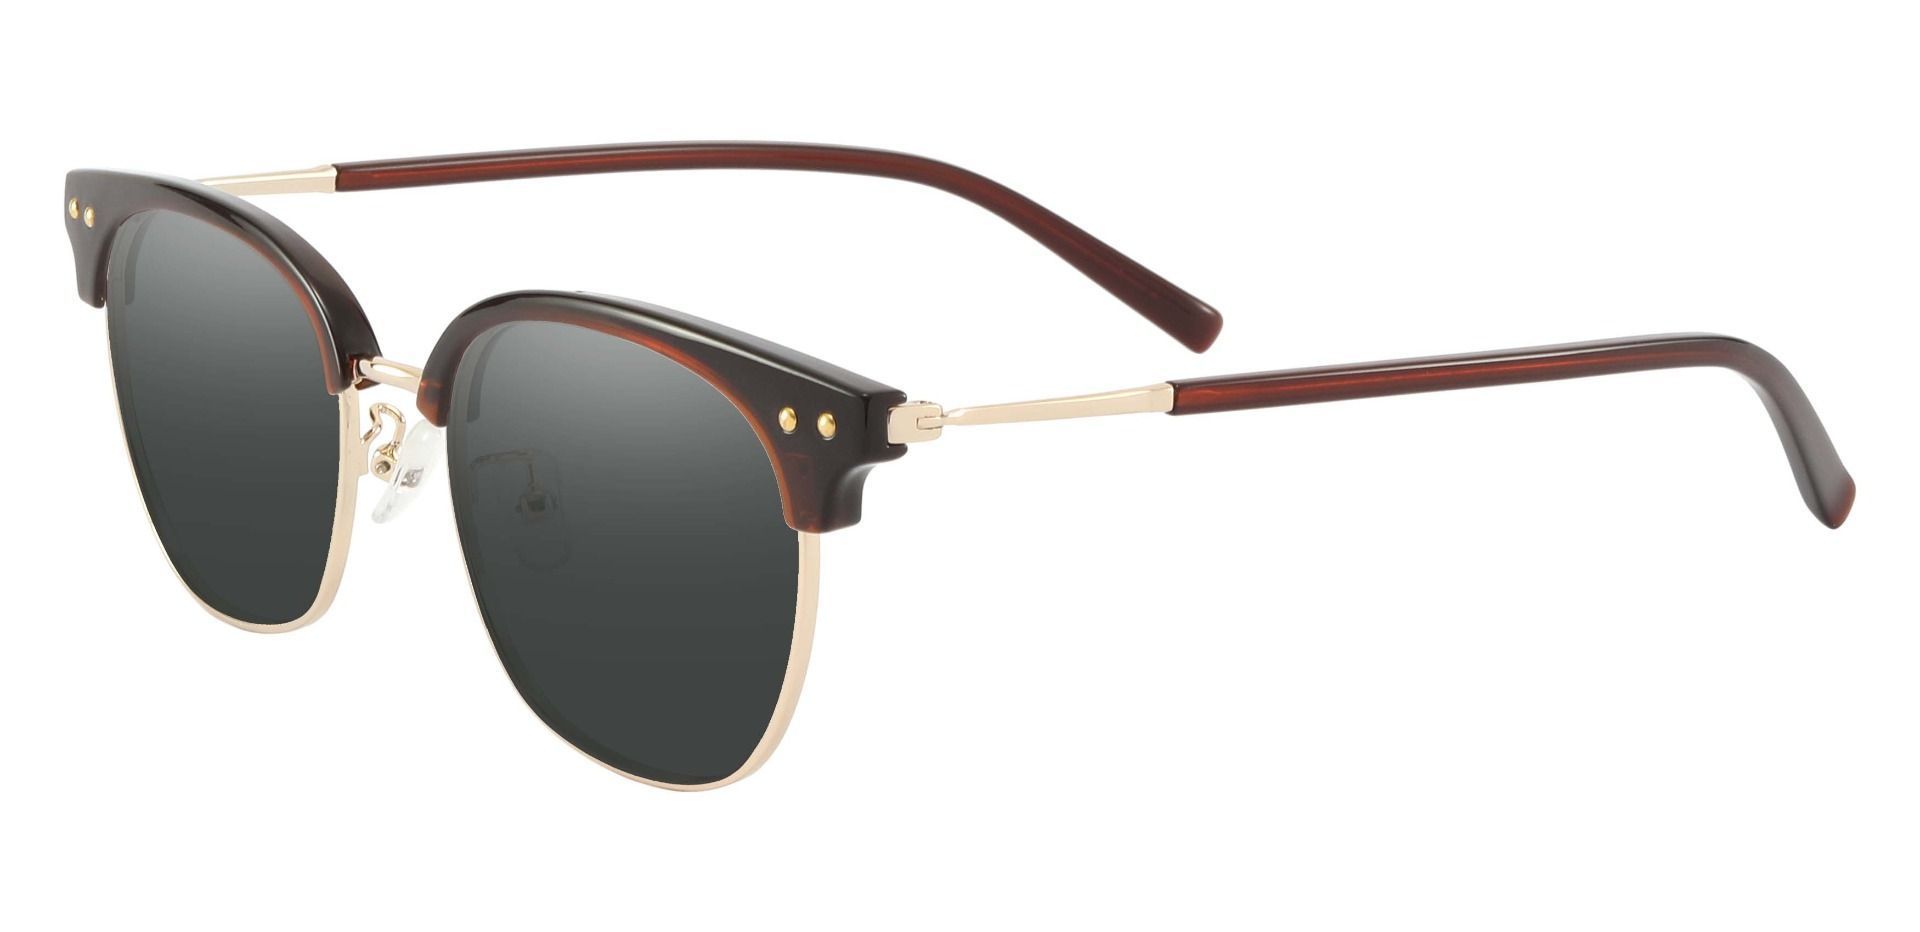 Bolivia Browline Prescription Sunglasses - Brown Frame With Gray Lenses